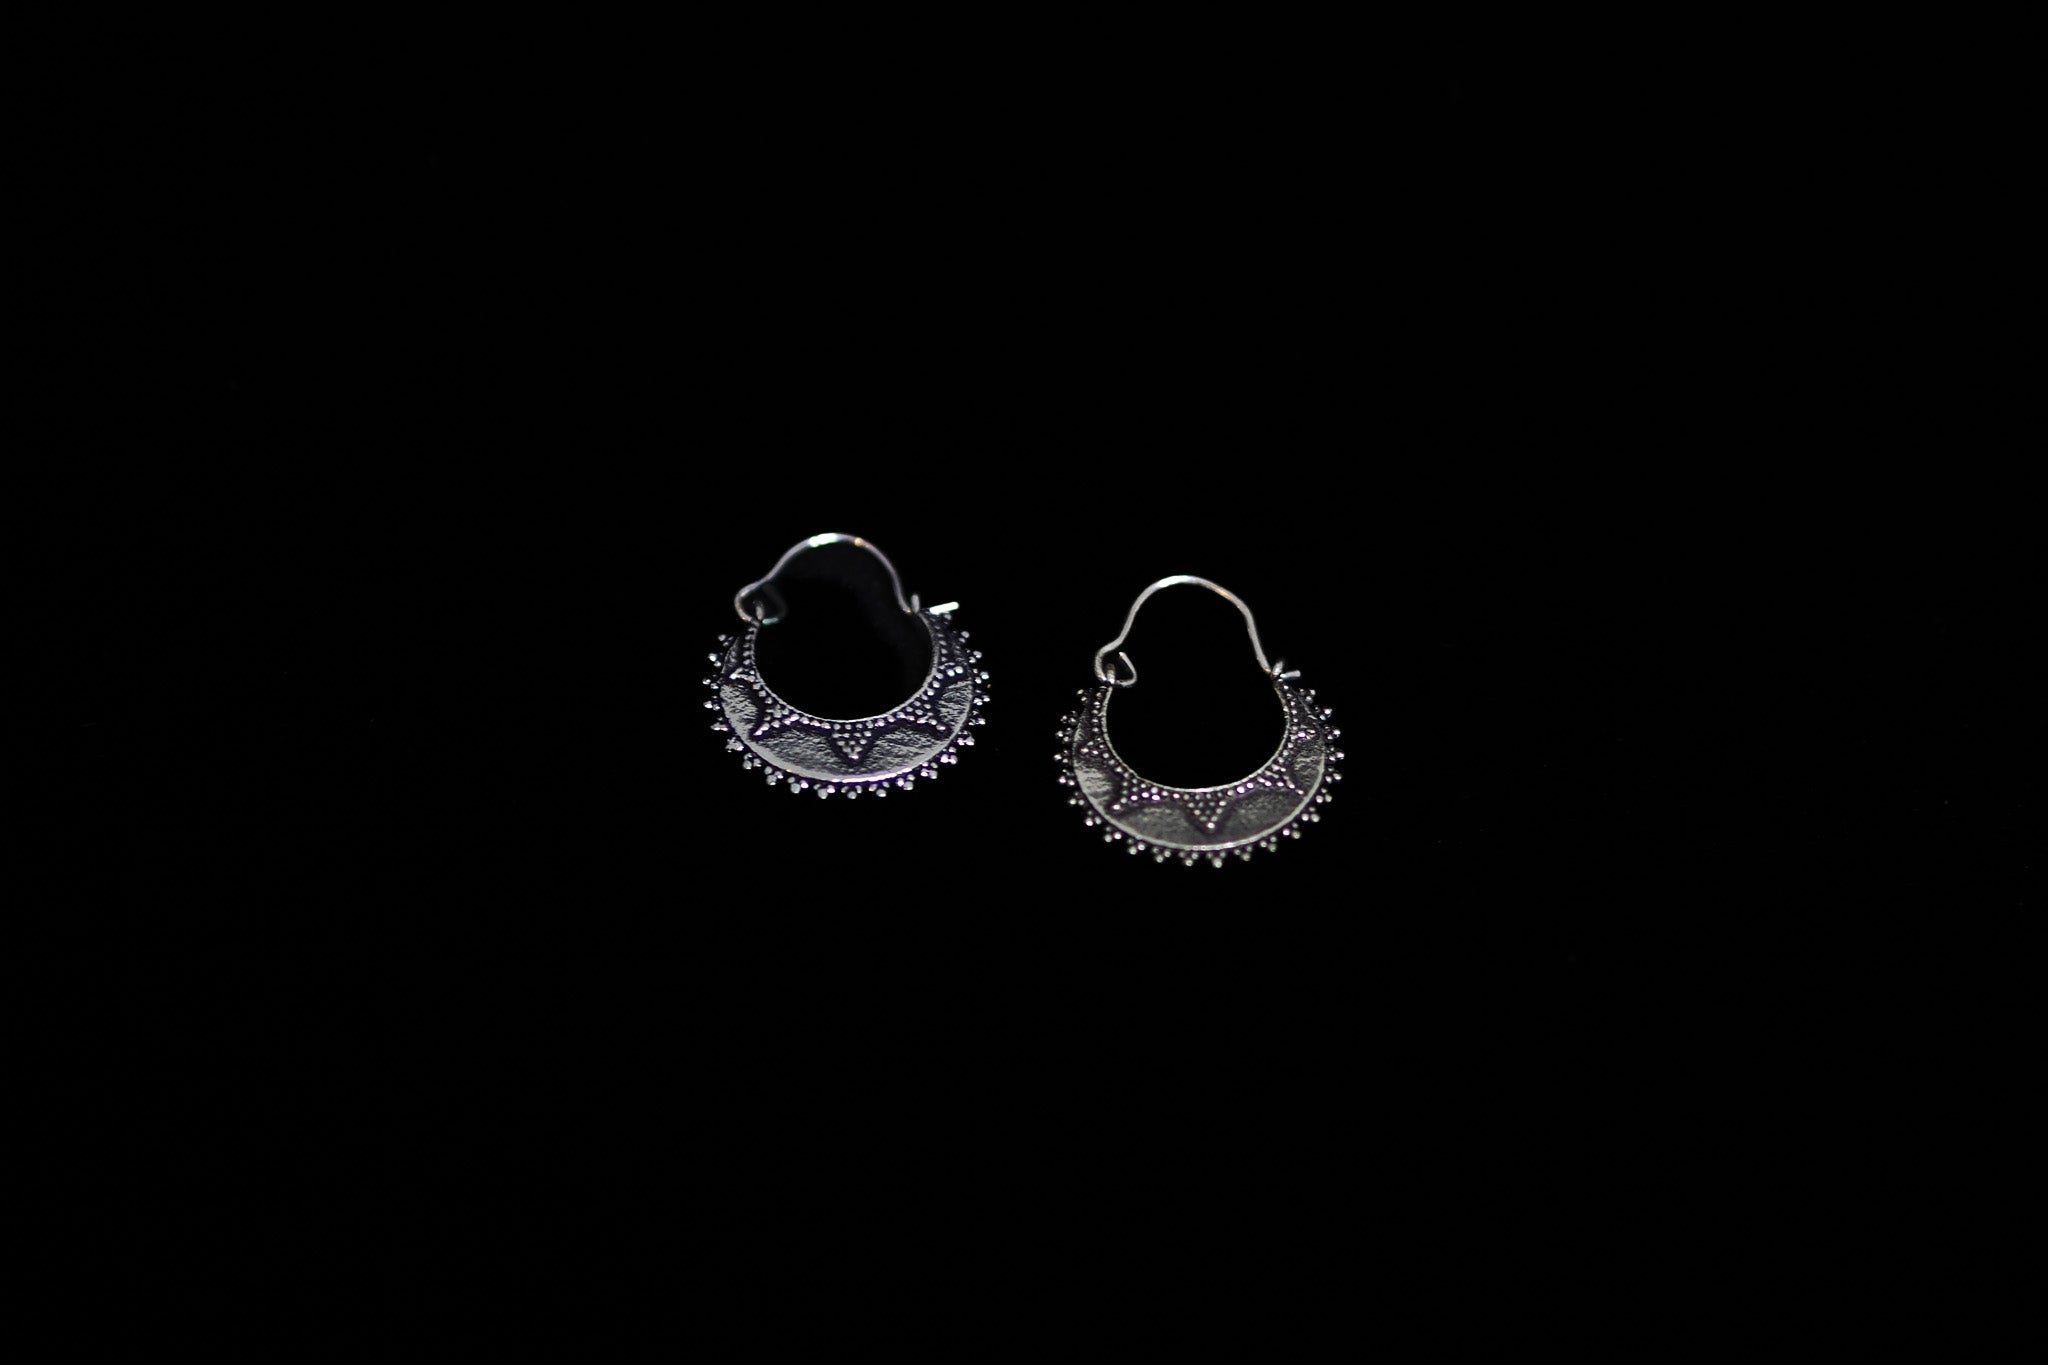 Moon symbol earrings (small)